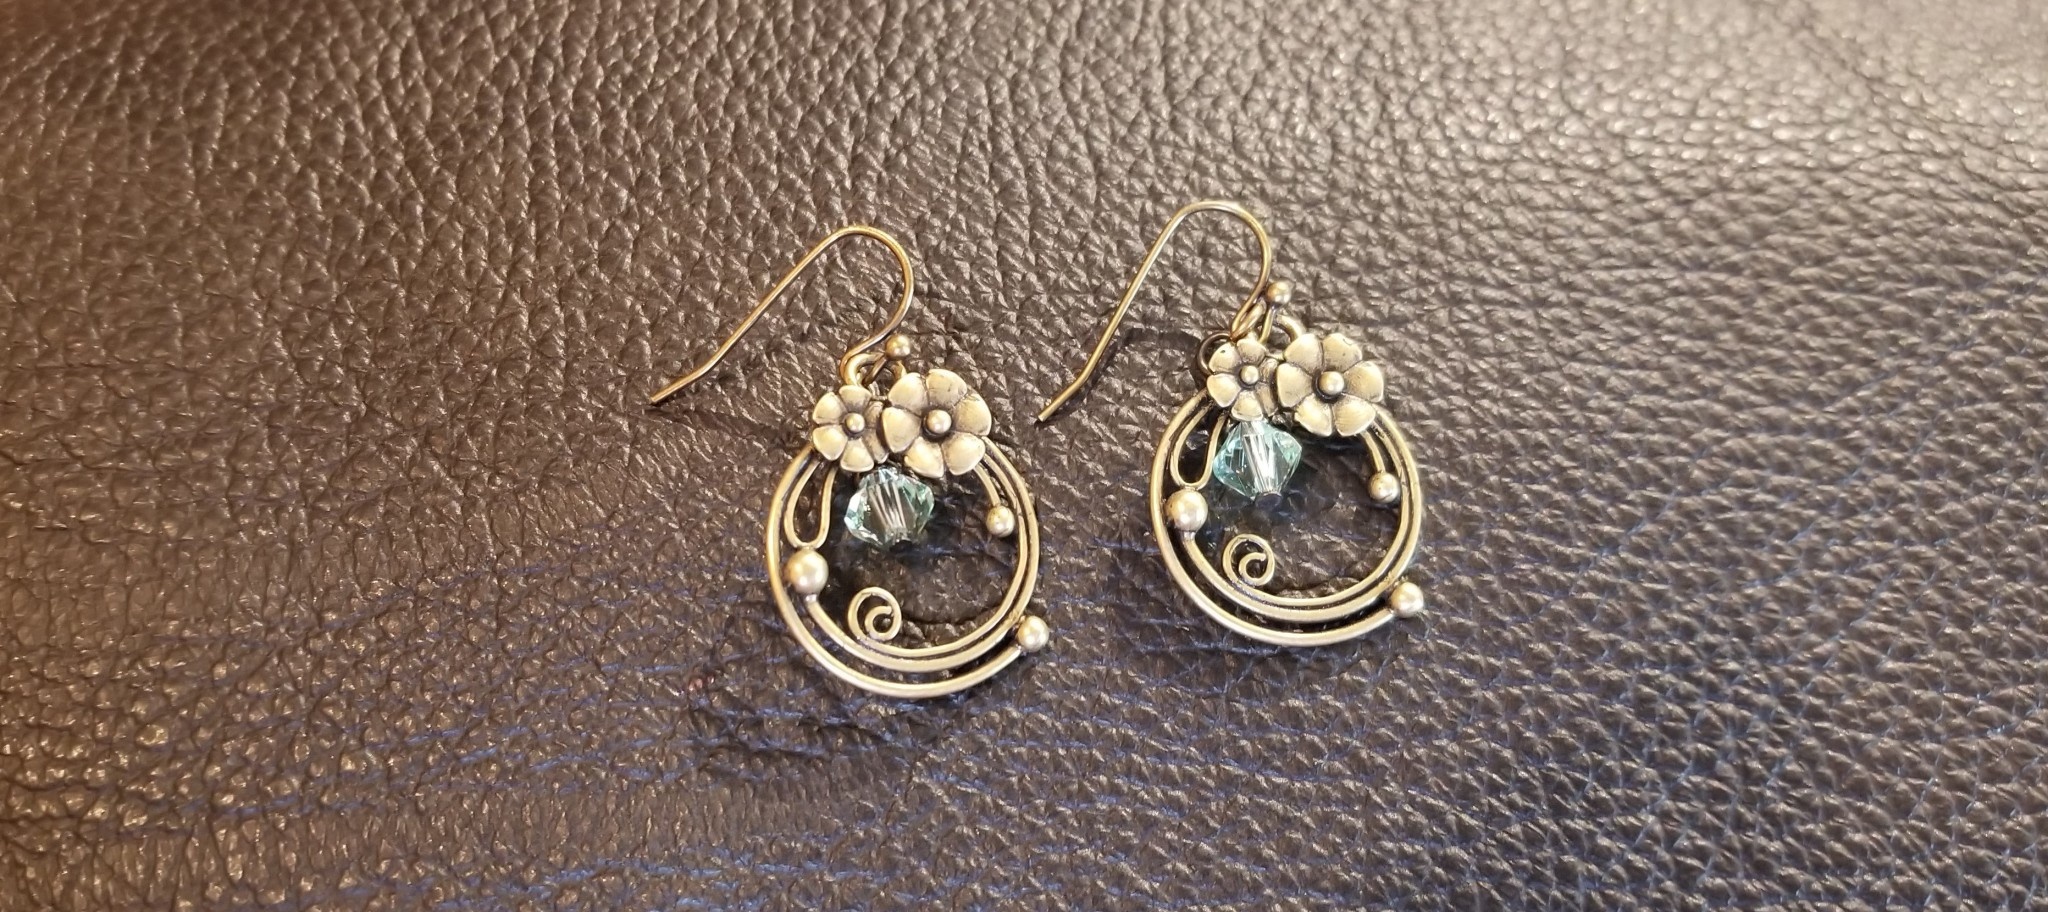 cool water jewelry EW637-198 Earrings: Water's Edge Floral Ring Earrings****